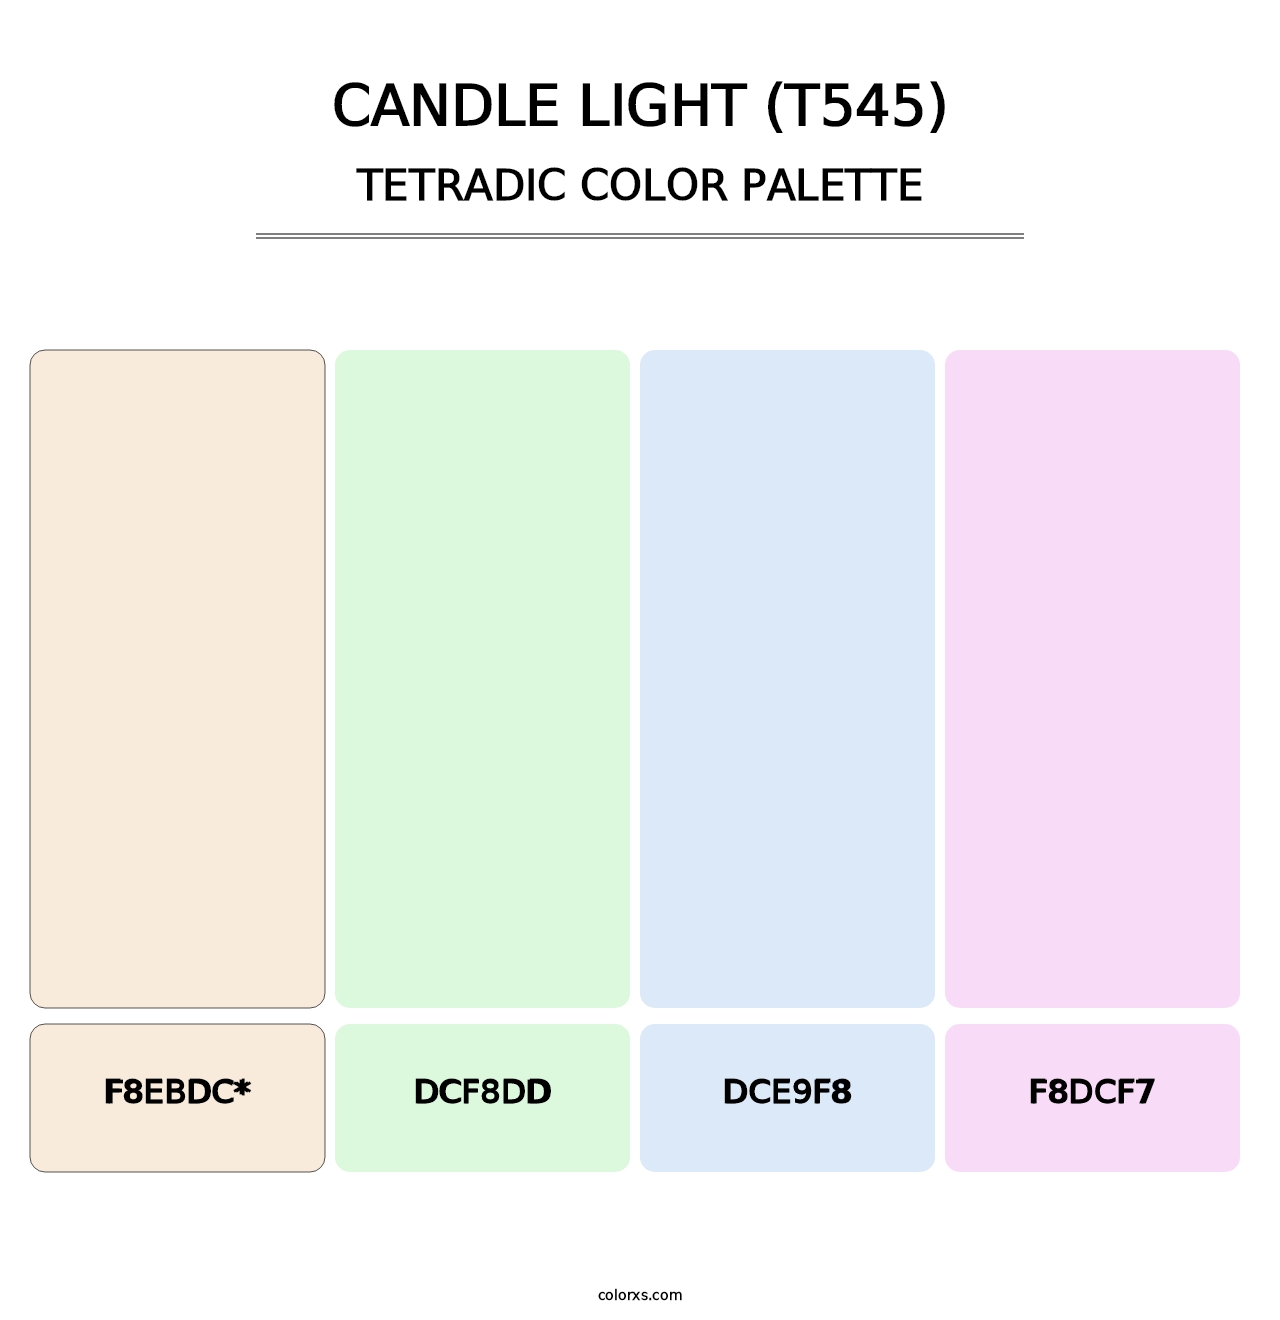 Candle Light (T545) - Tetradic Color Palette